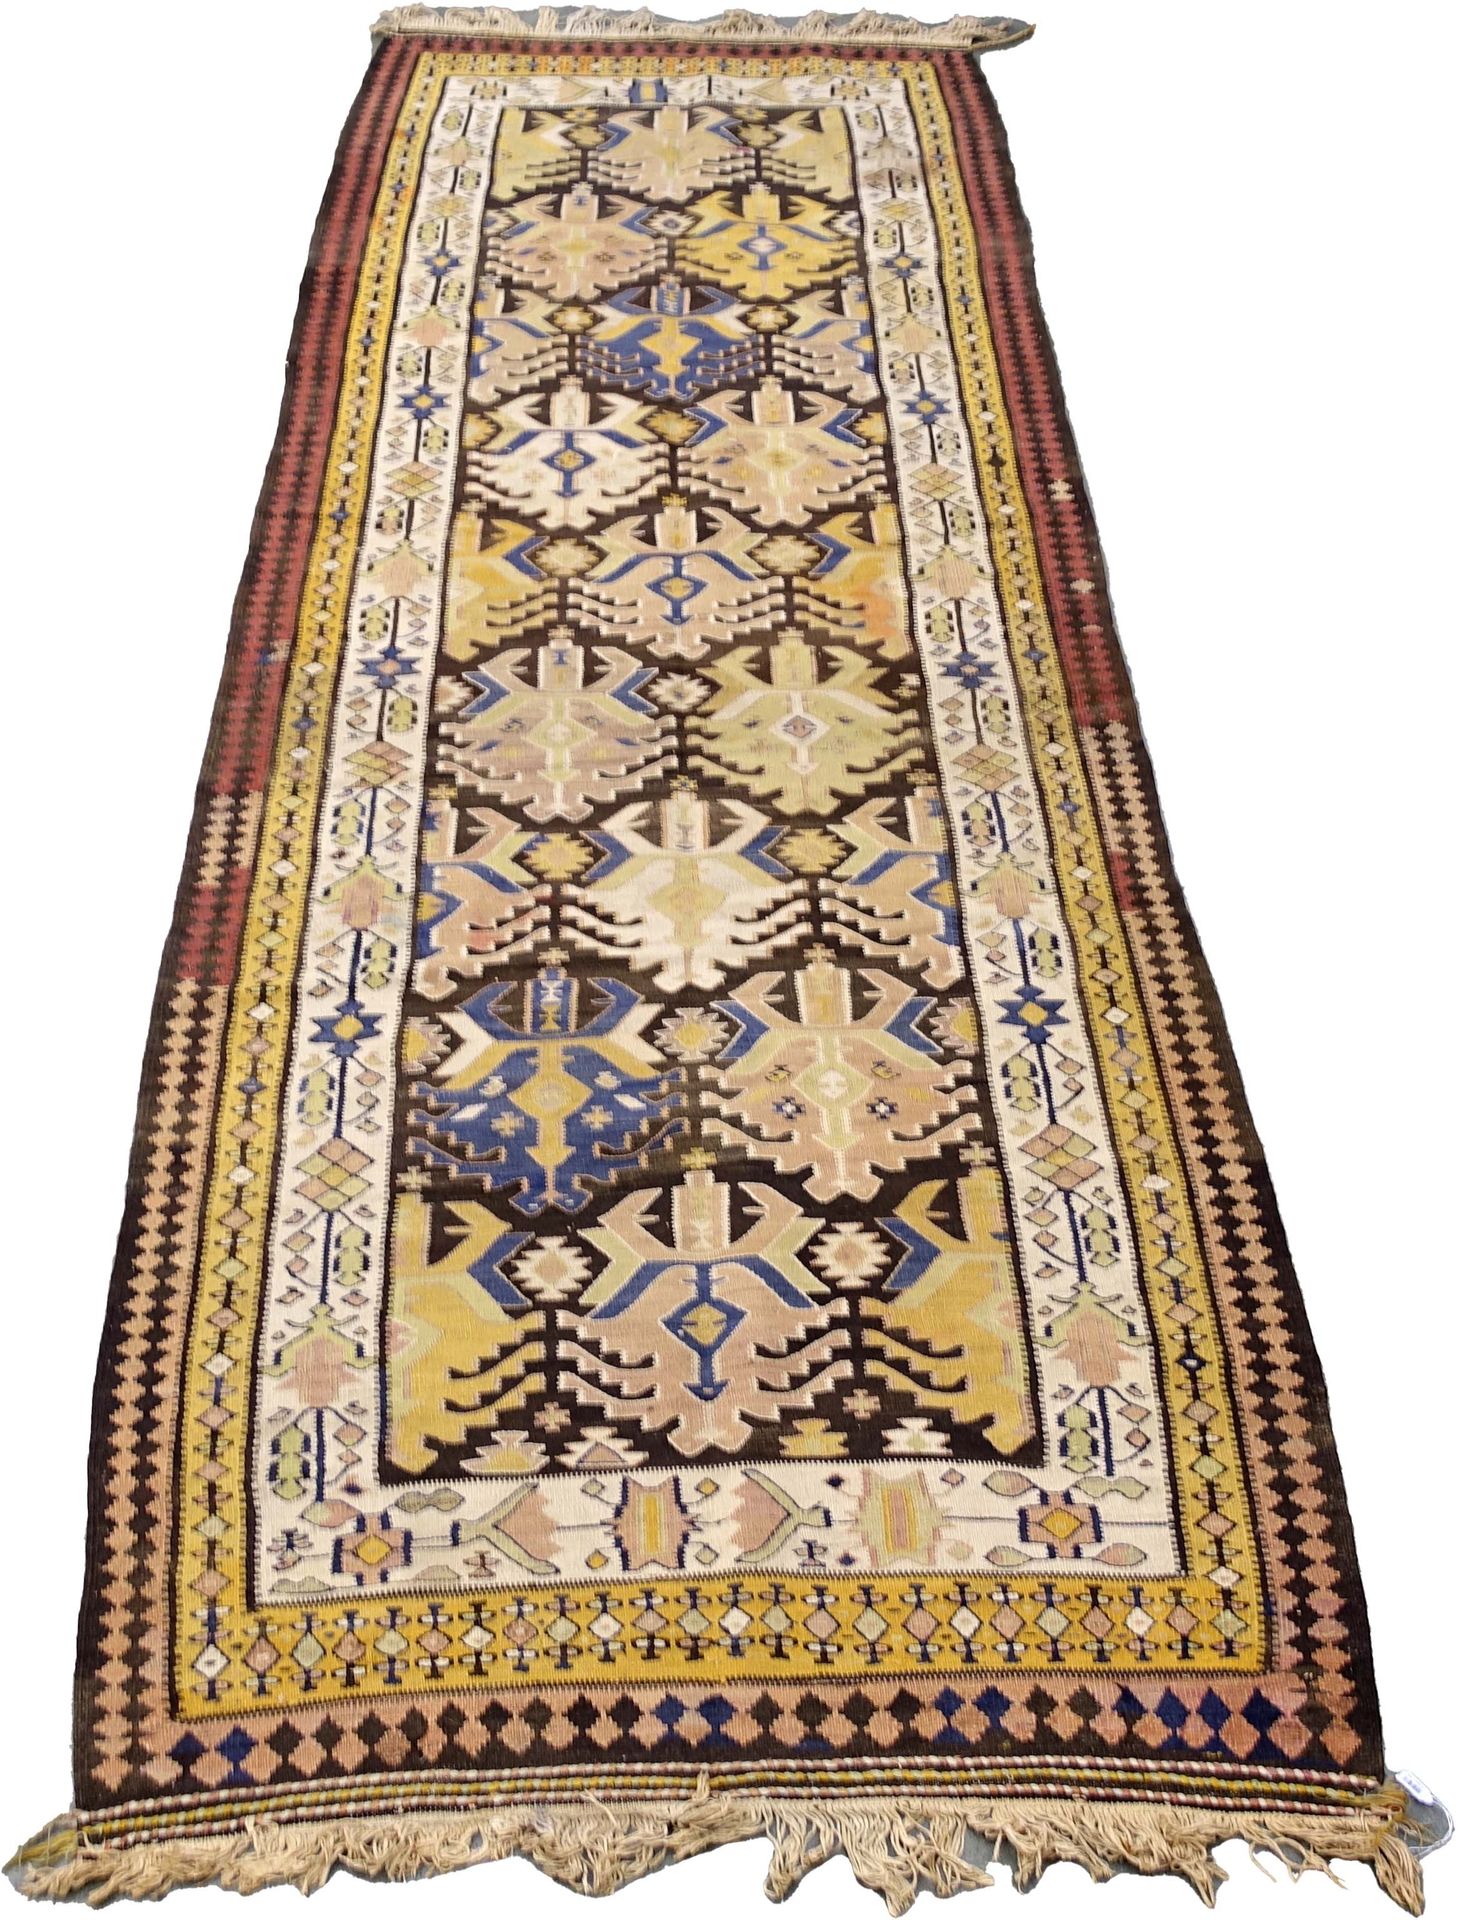 Tapis Kilim-Caucase. 镂空的奖章在黑色的背景上显得格外突出。几何边框。尺寸：401 x 136厘米。